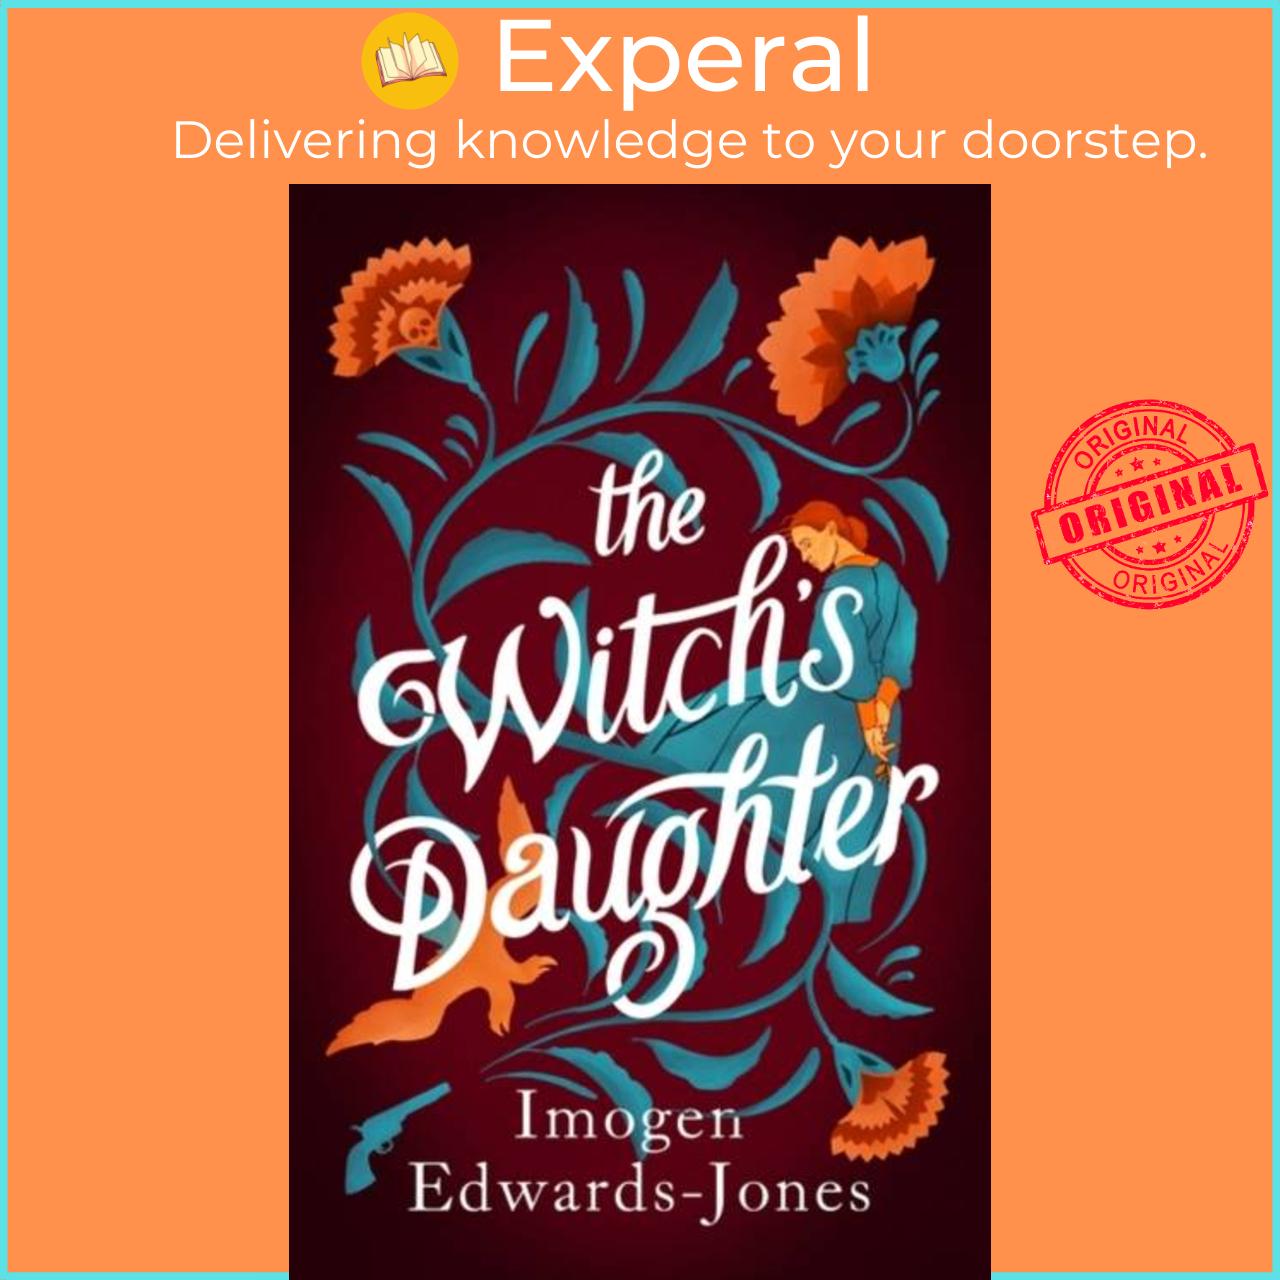 Sách - The Witch's Daughter by Edwards-Jones Imogen Edwards-Jones (UK edition, paperback)